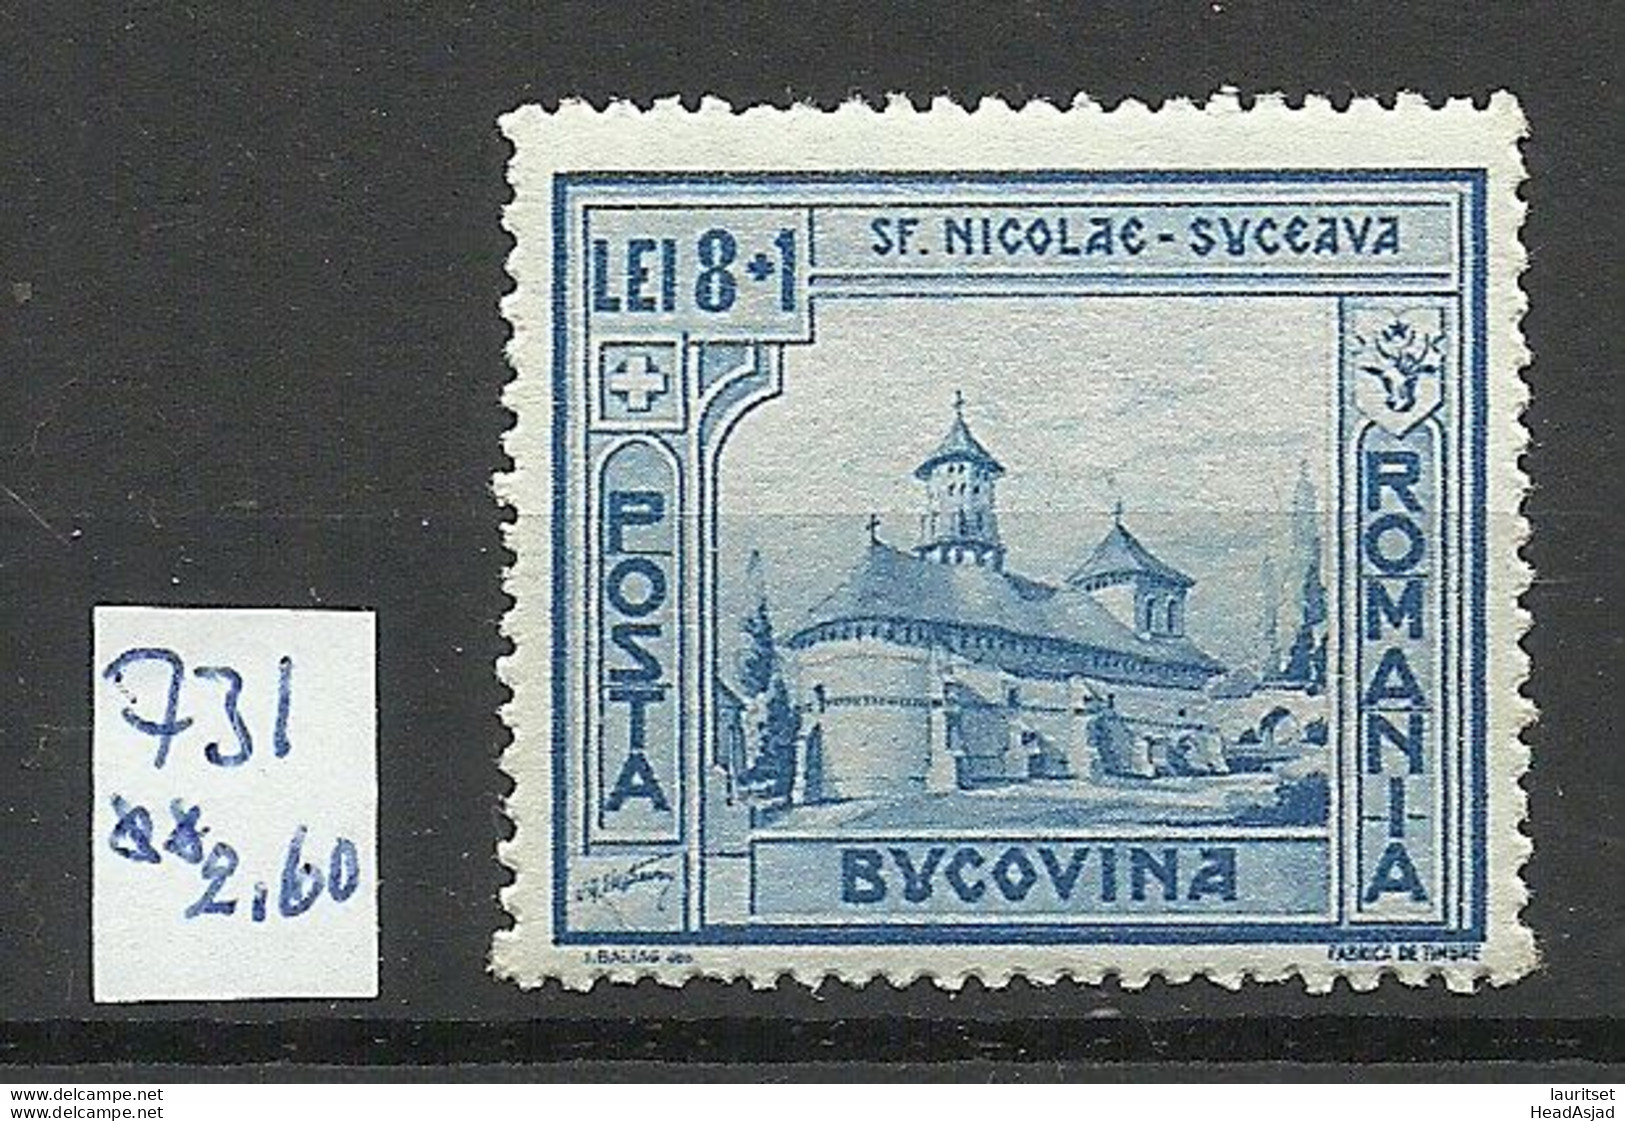 ROMANIA Rumänien 1941 Michel 738 Bucovina Arcitecture MNH - Neufs